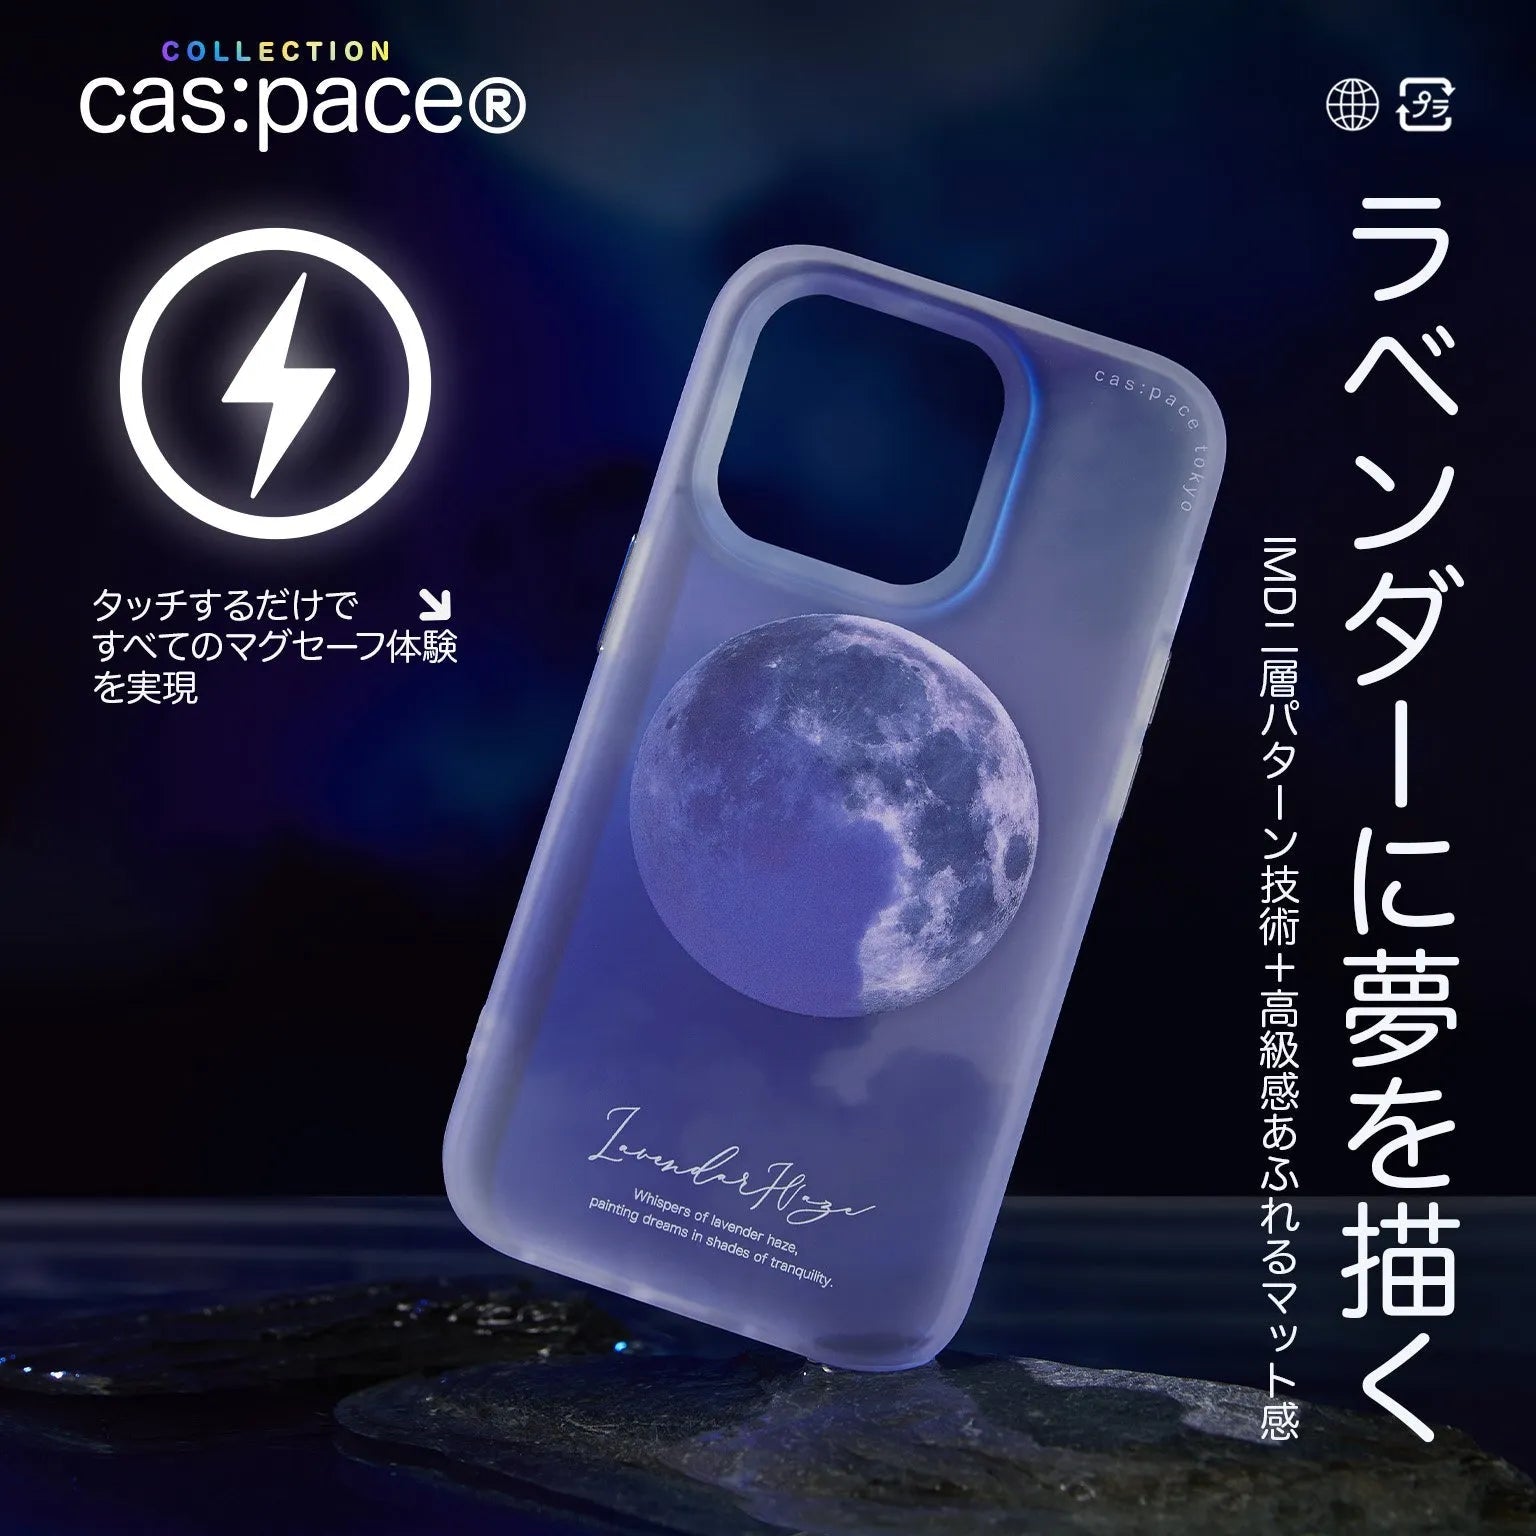 cas:pace collection「lavender haze」MagSafe対応携帯ケース - cas:pace 殼空間